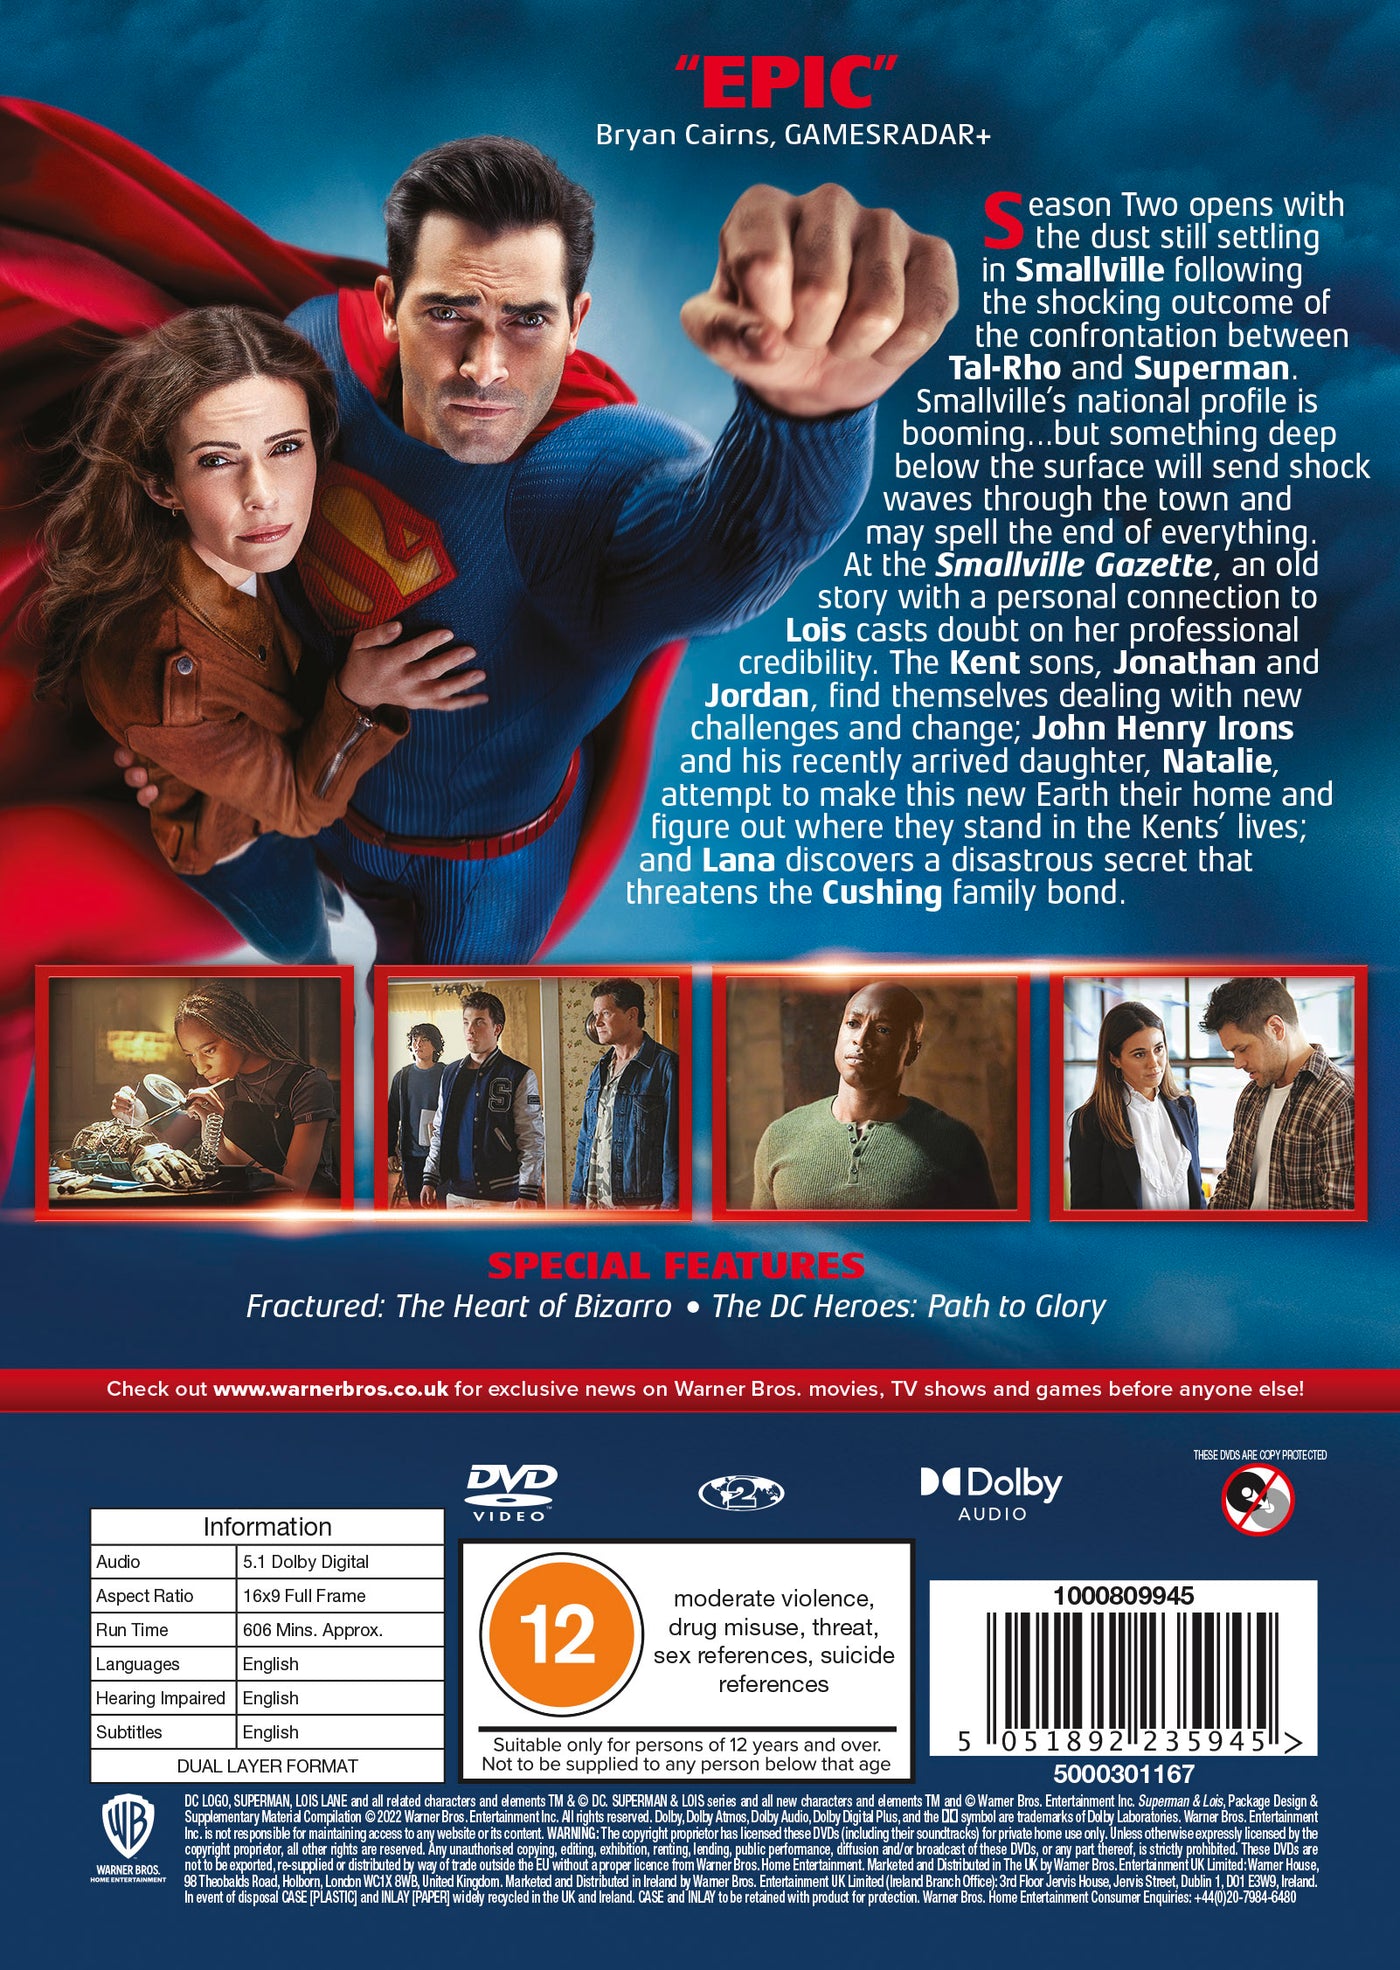 Superman and Lois: Season 2 (DVD)